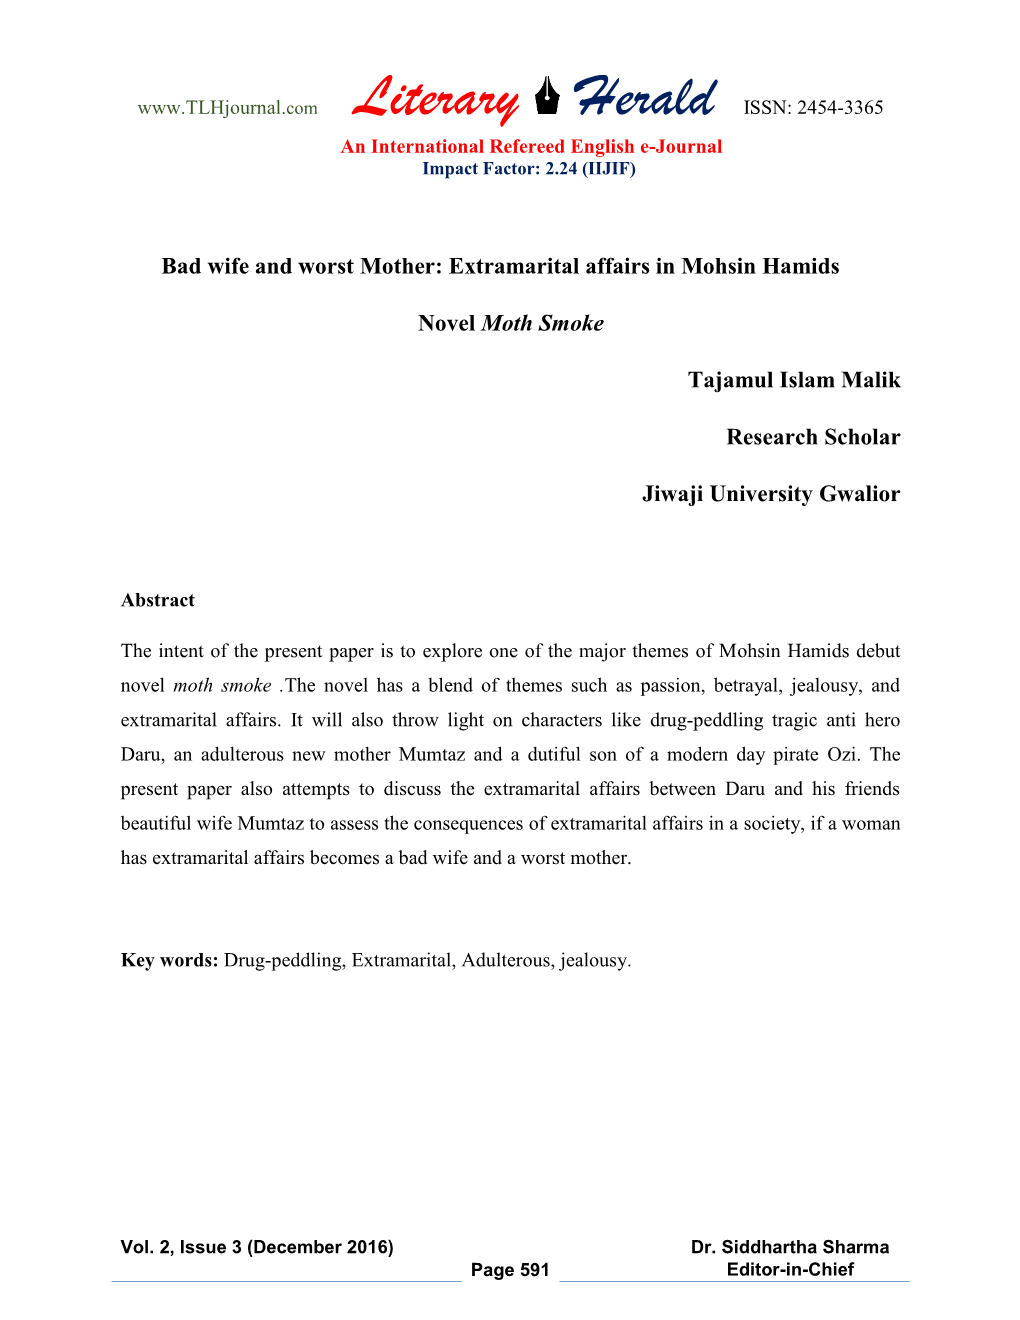 Extramarital Affairs in Mohsin Hamids Novel Moth Smoke Tajamul Islam Malik Research Scholar Jiwaji U